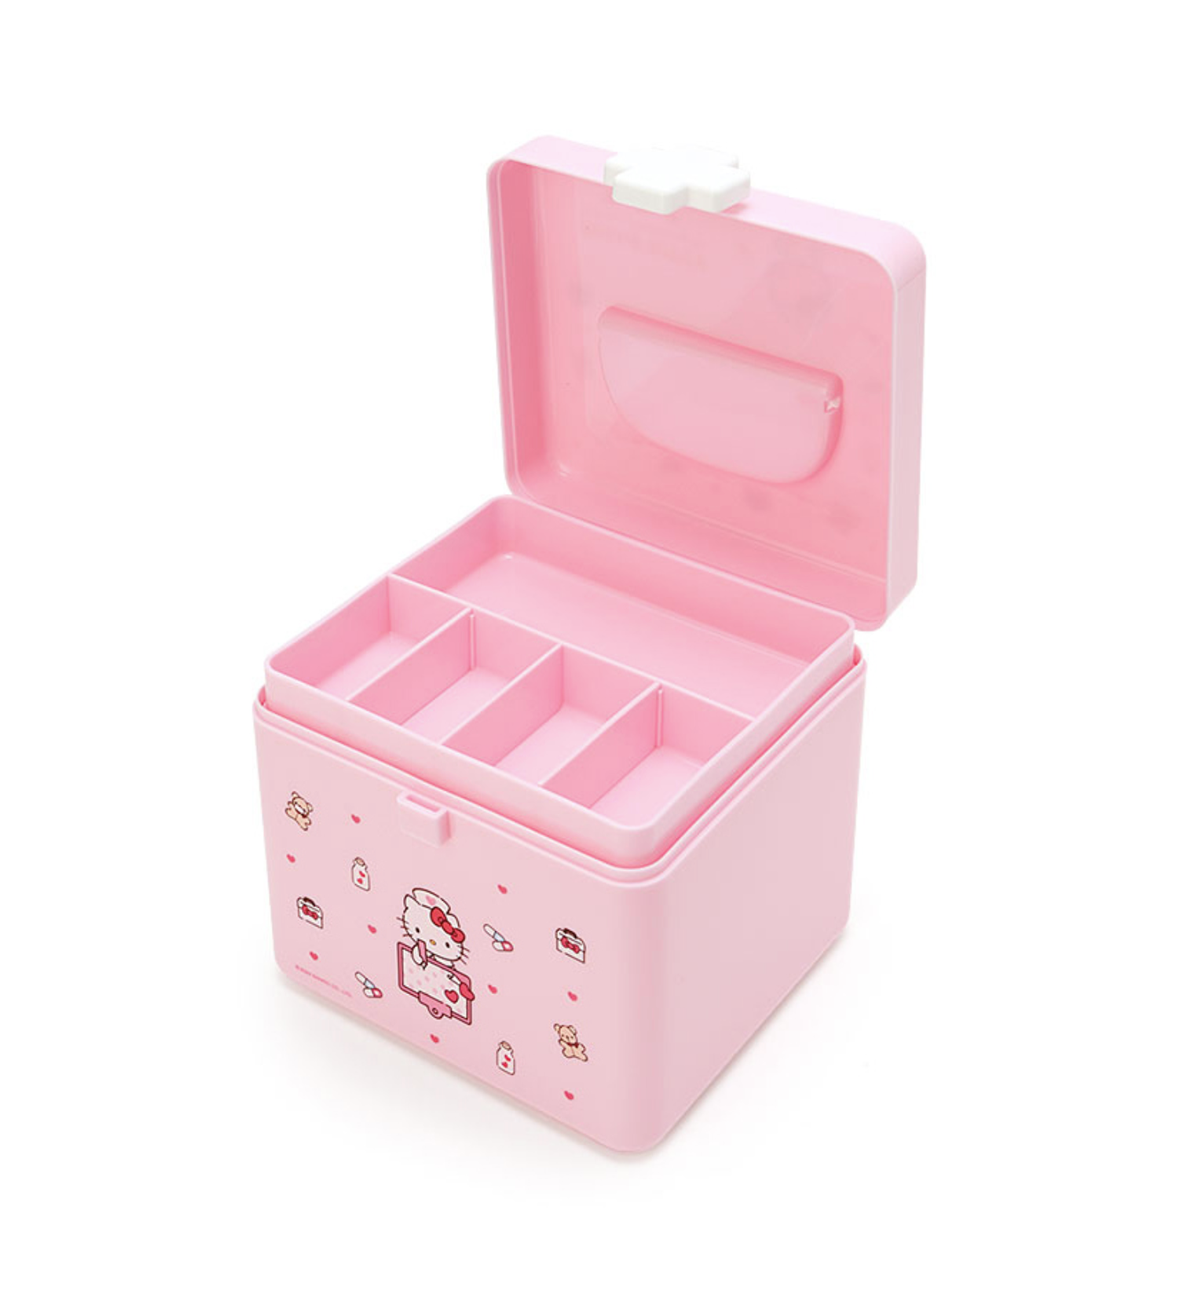 Sanrio First Aid Kit Series [Hello Kitty]